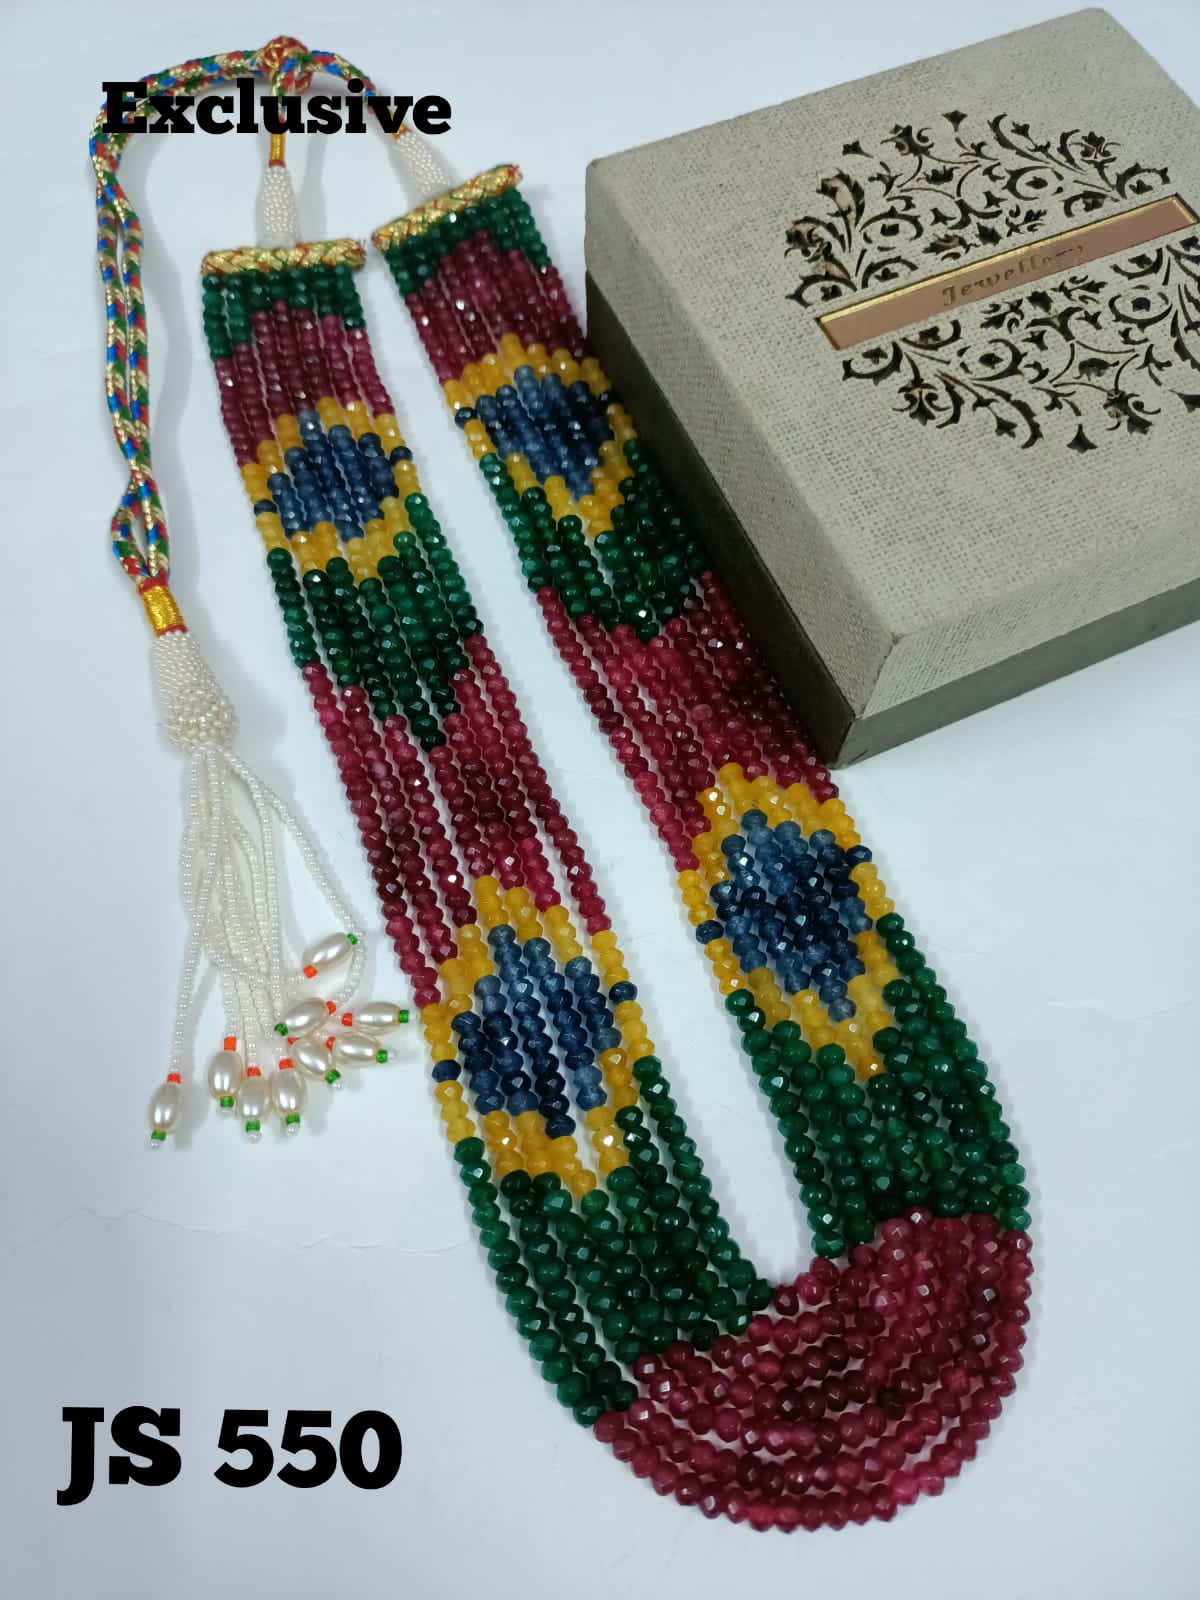 Semi precious onyx beads string